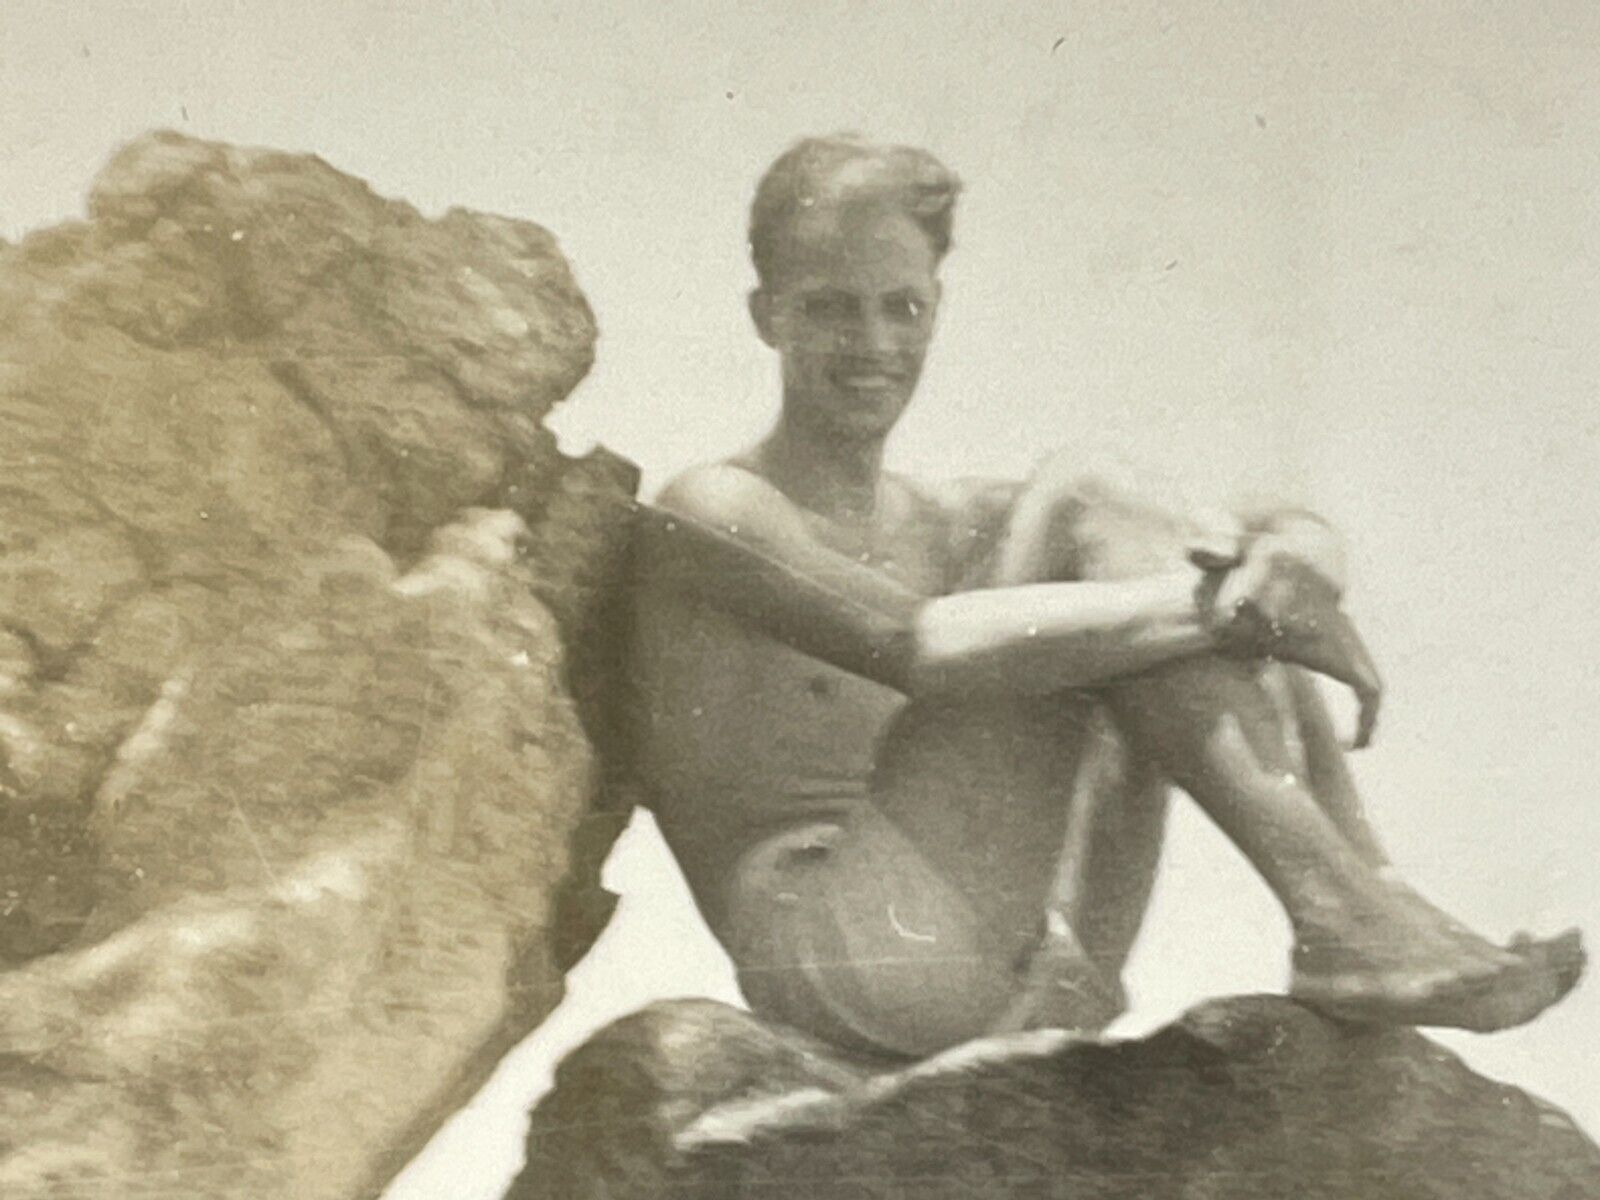 PH Photograph Handsome Man Short Bathing Suit Sexy Legs Big Rocks 1940's Feet